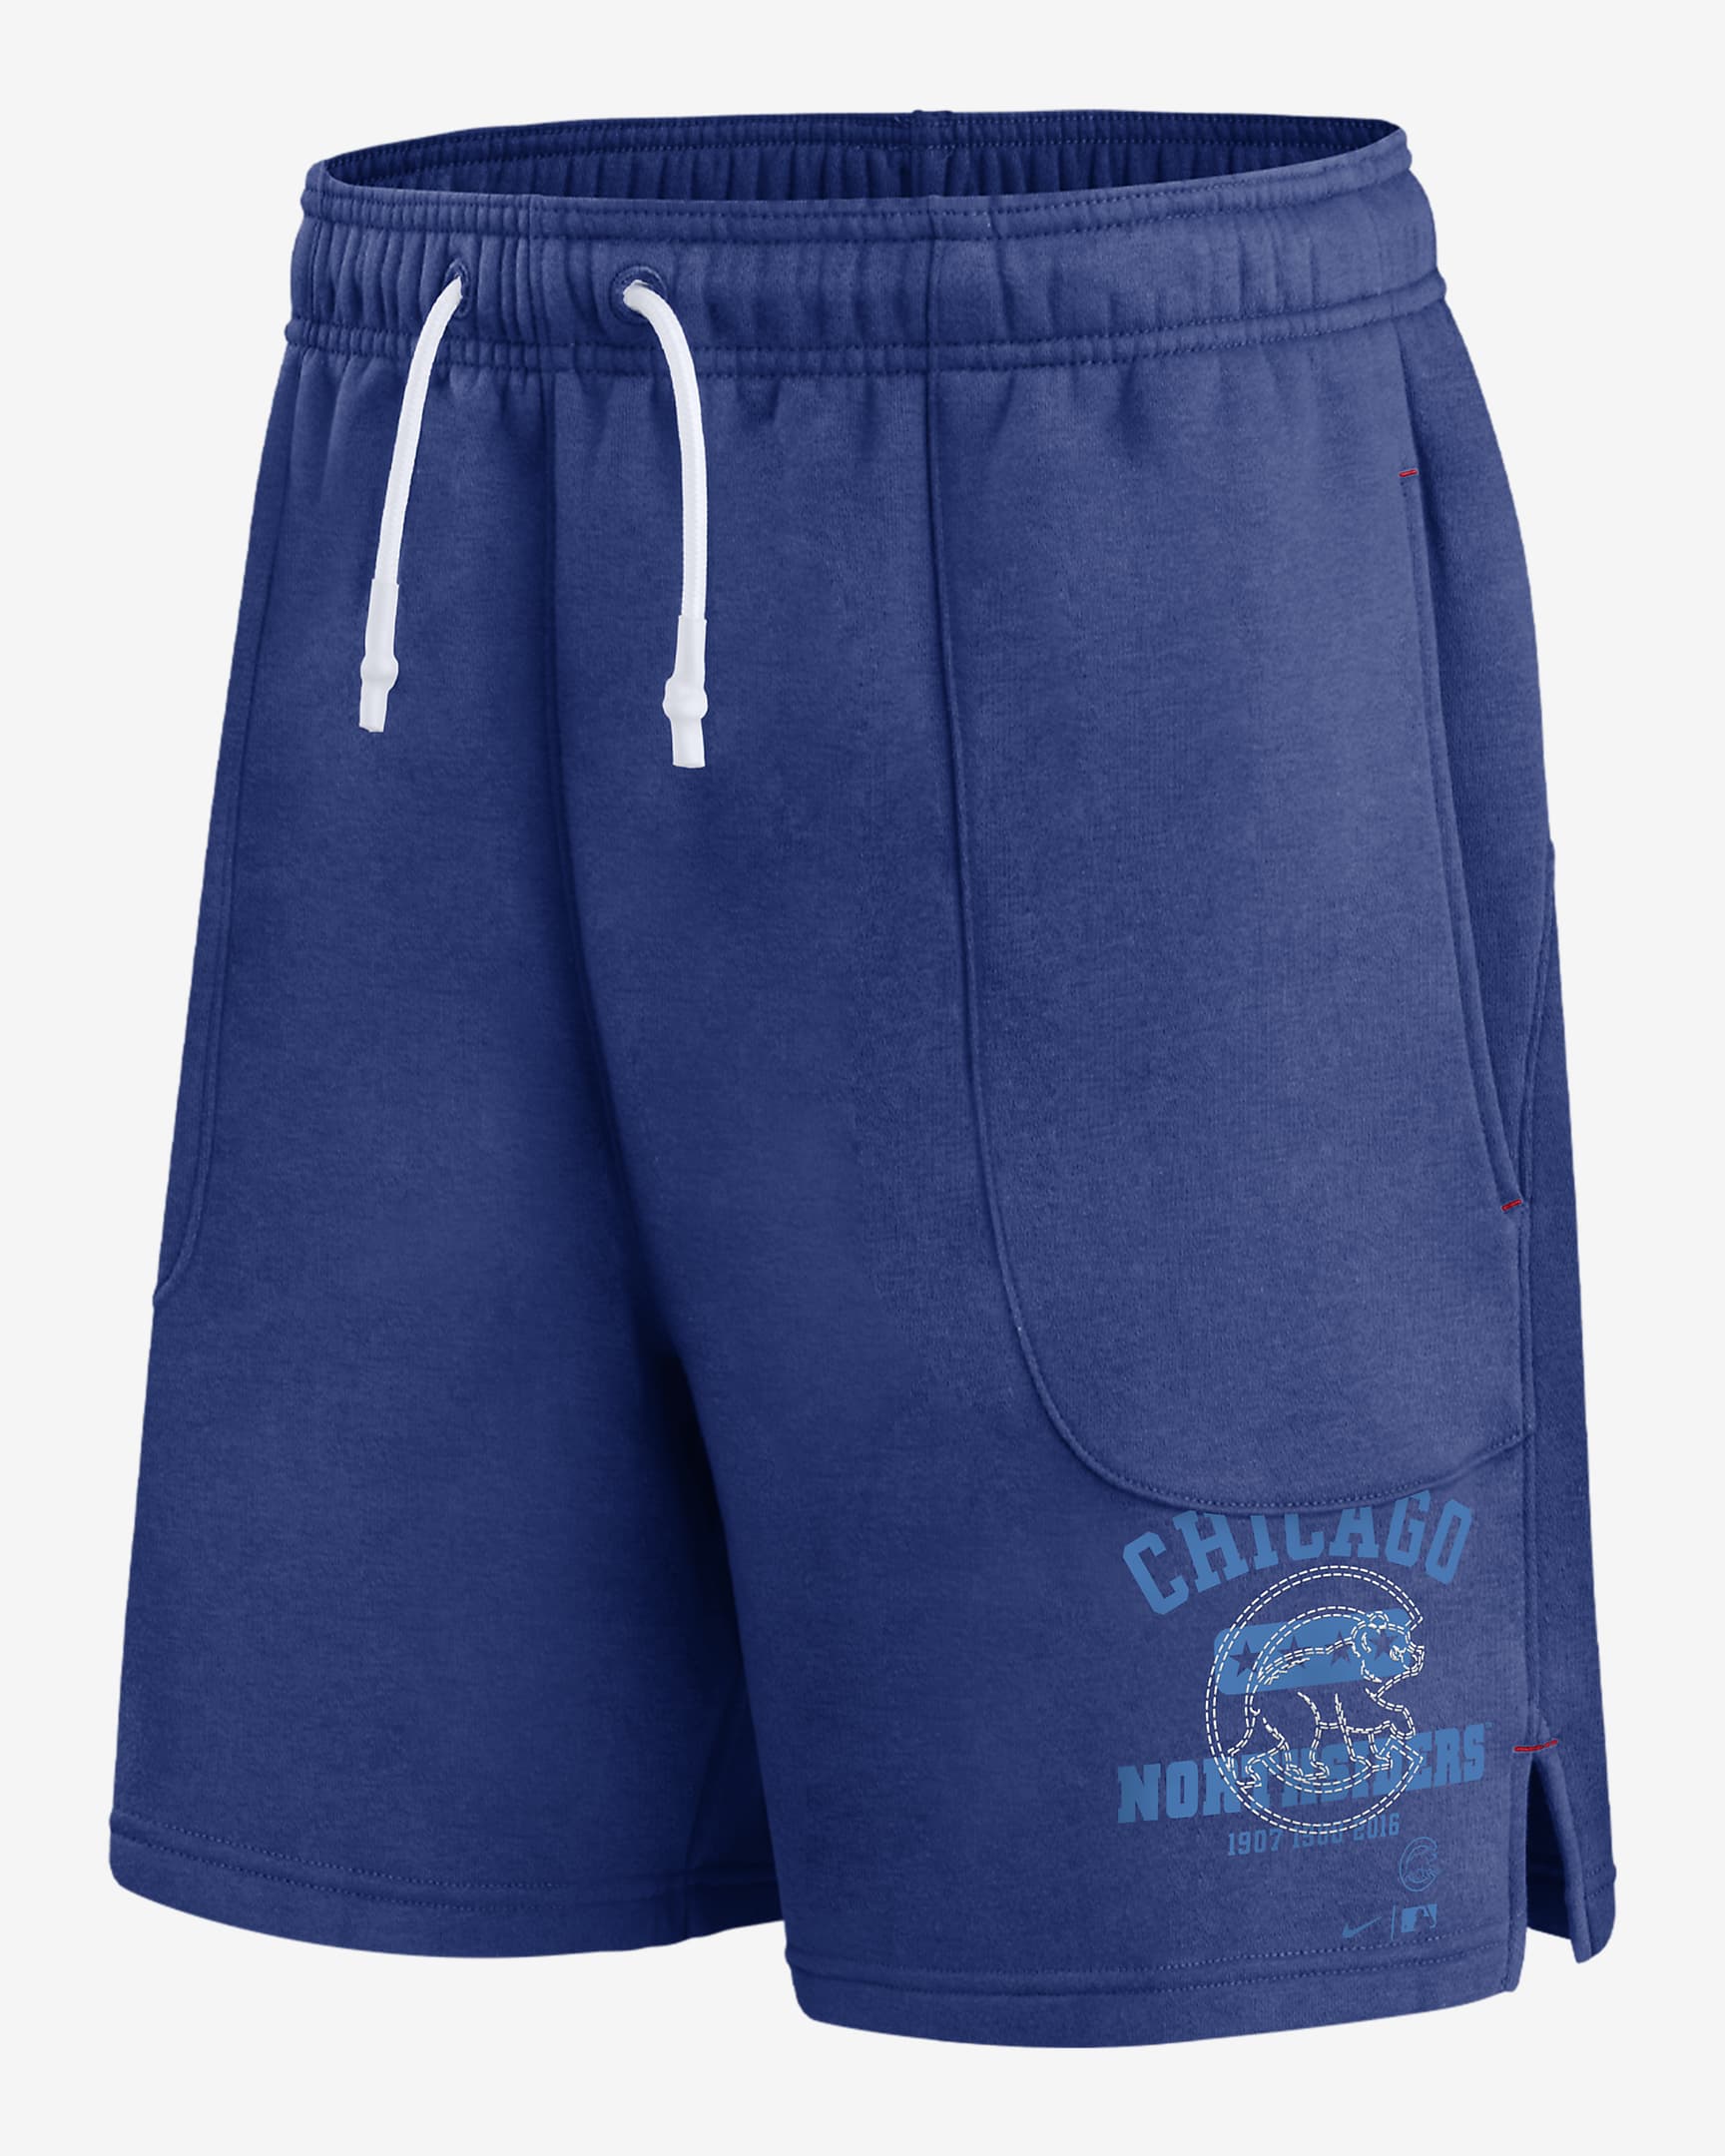 Nike Statement Ballgame (MLB Chicago Cubs) Men's Shorts. Nike.com